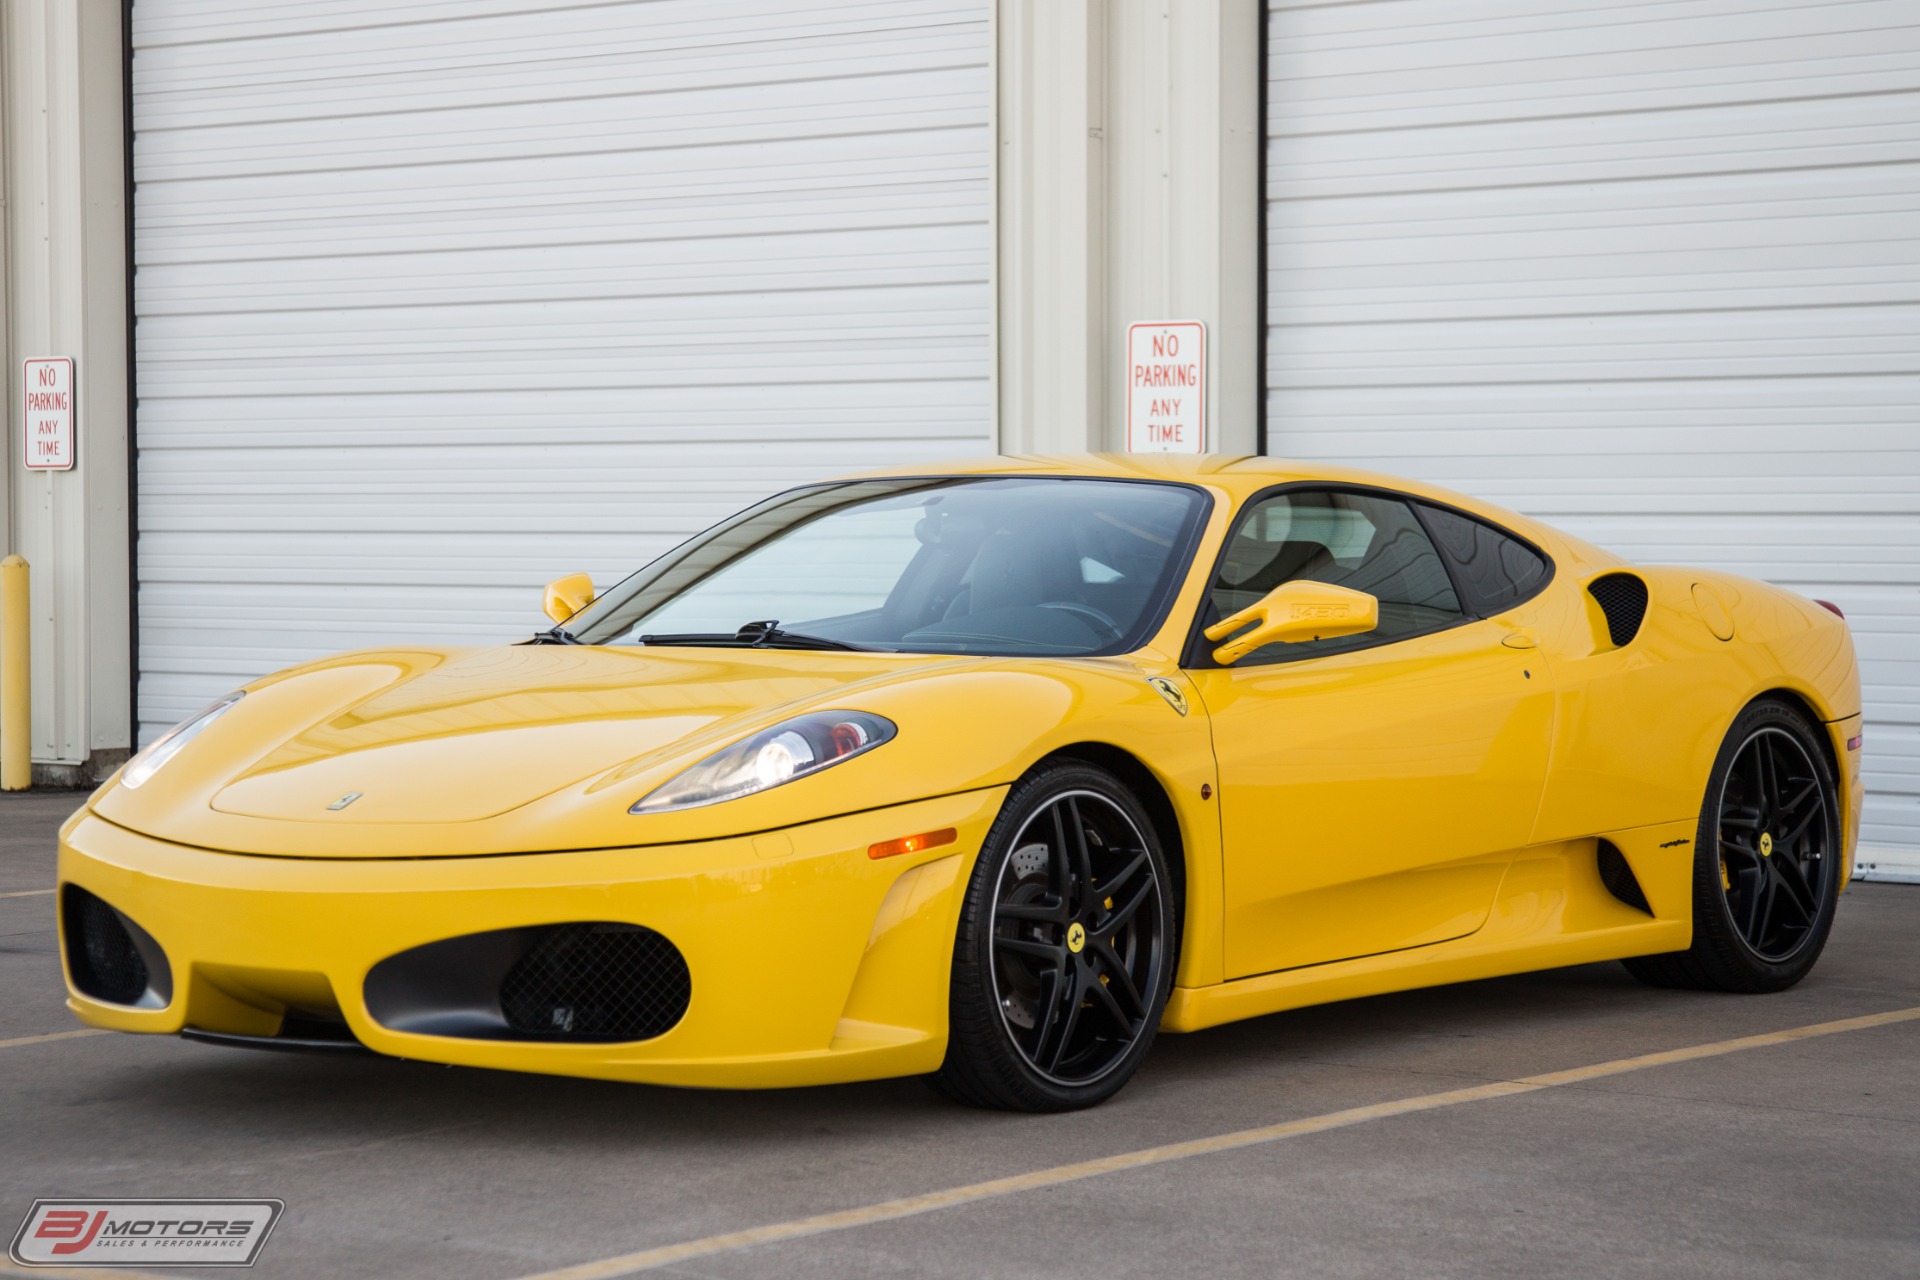 Used 2006 Ferrari F430 F1 For Sale ($109,995) | BJ Motors Stock #60150939